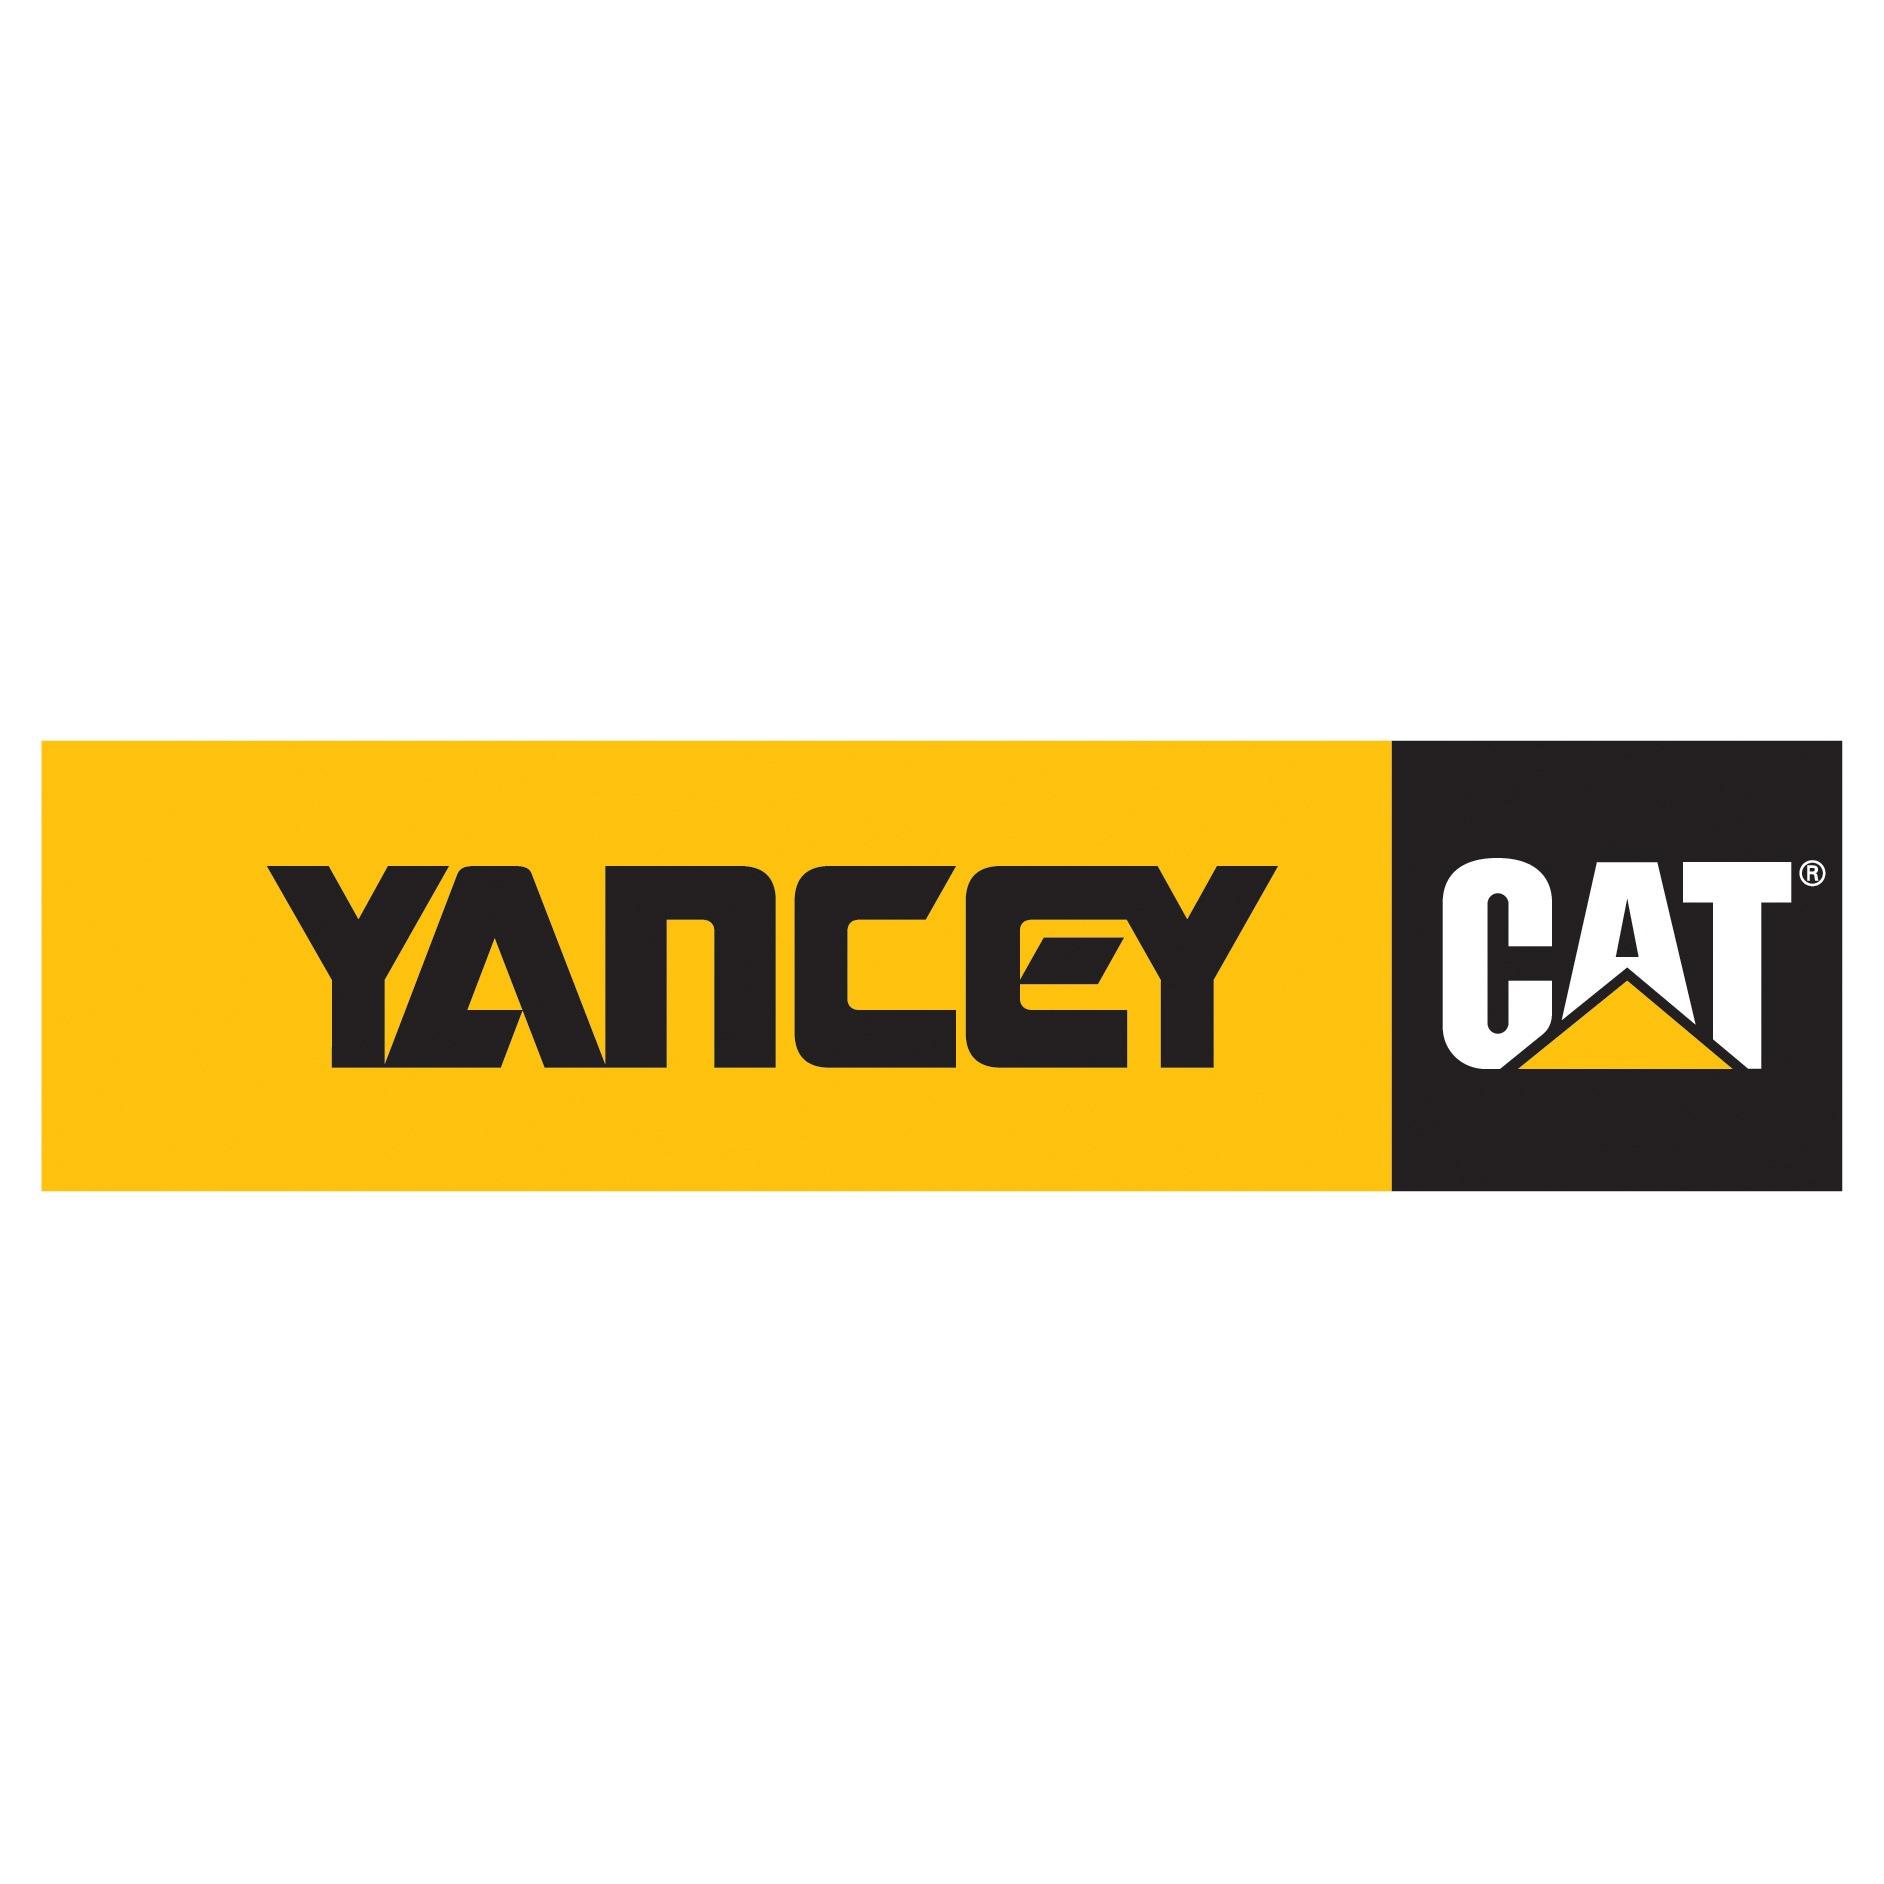 Yancey Bros. Co. Logo